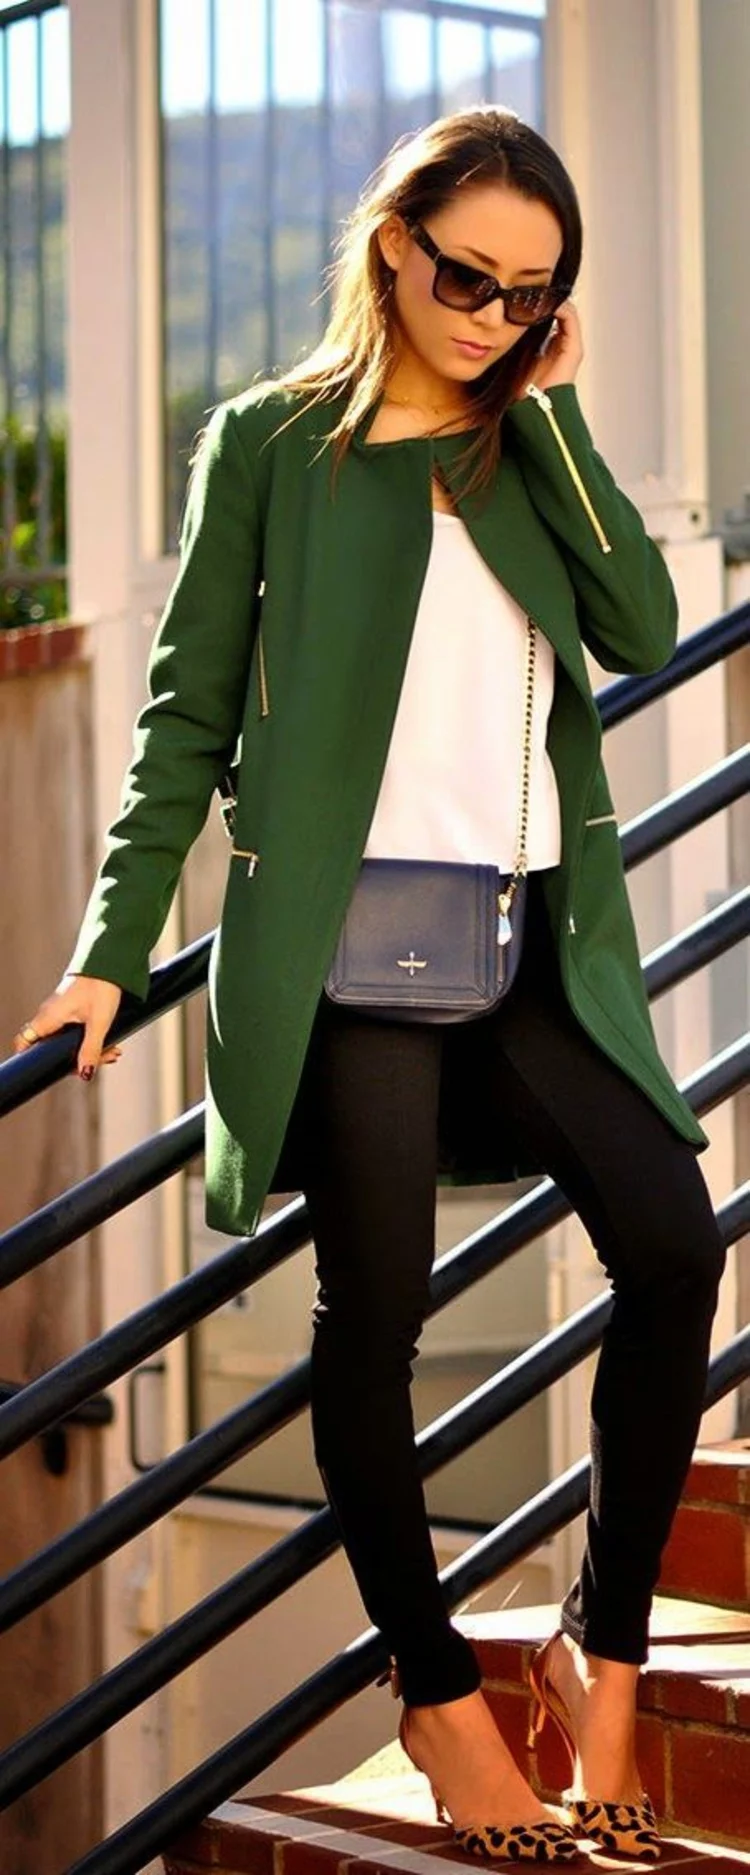 moderne Damenmäntel aktuelle Trendfarben Grün